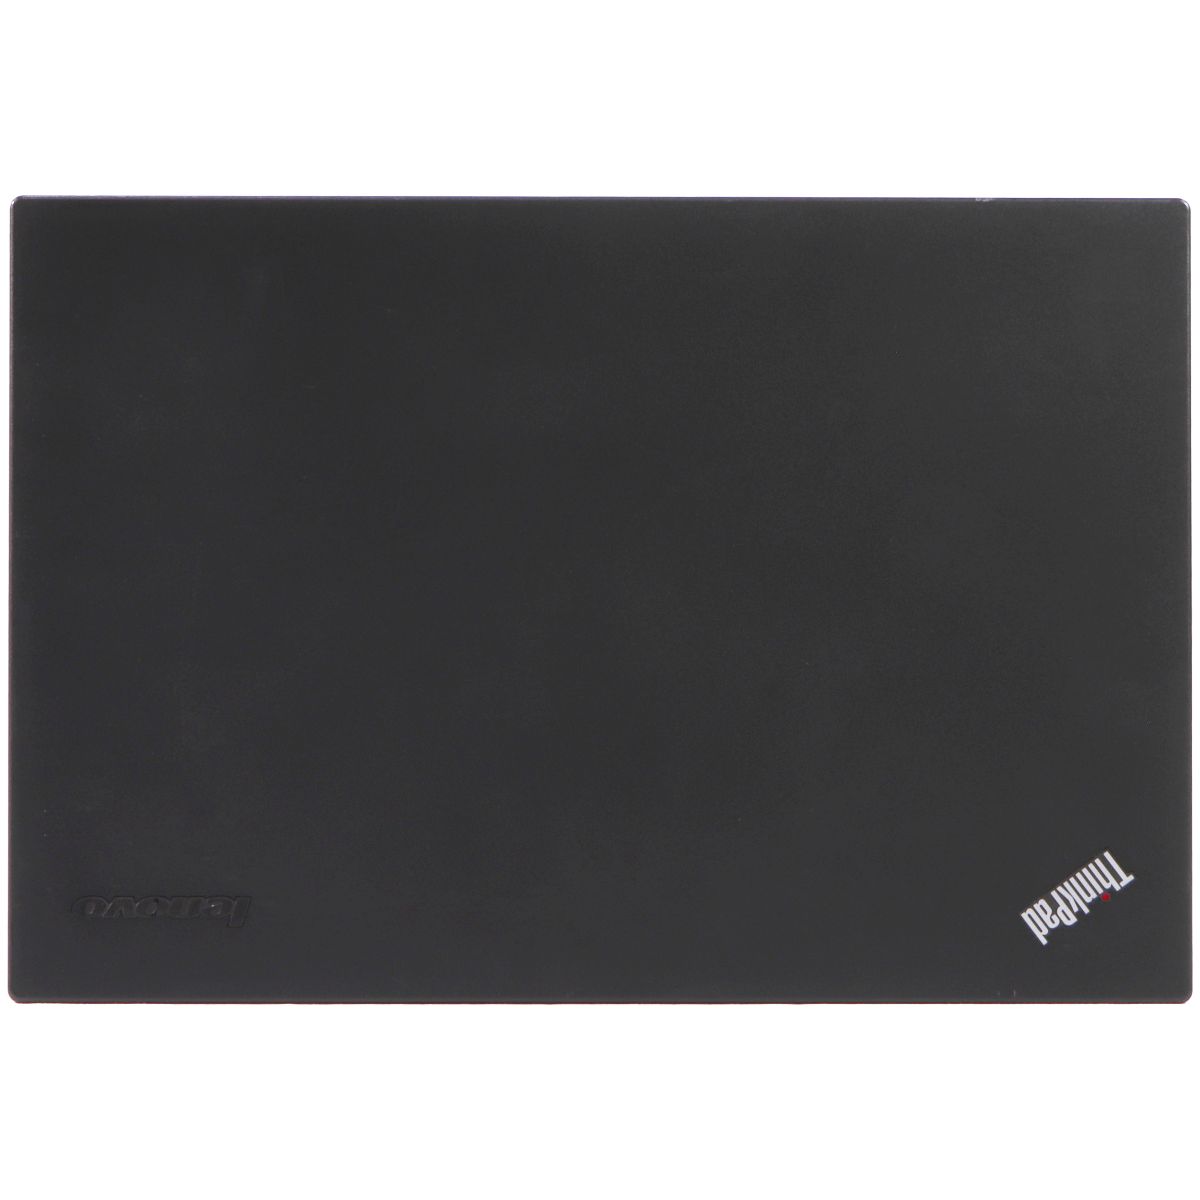 Lenovo ThinkPad L450 14-in Laptop (20DT-001DUS) i5-4300U/256GB SSD/8GB/ 10 Home Laptops - PC Laptops & Netbooks Lenovo    - Simple Cell Bulk Wholesale Pricing - USA Seller